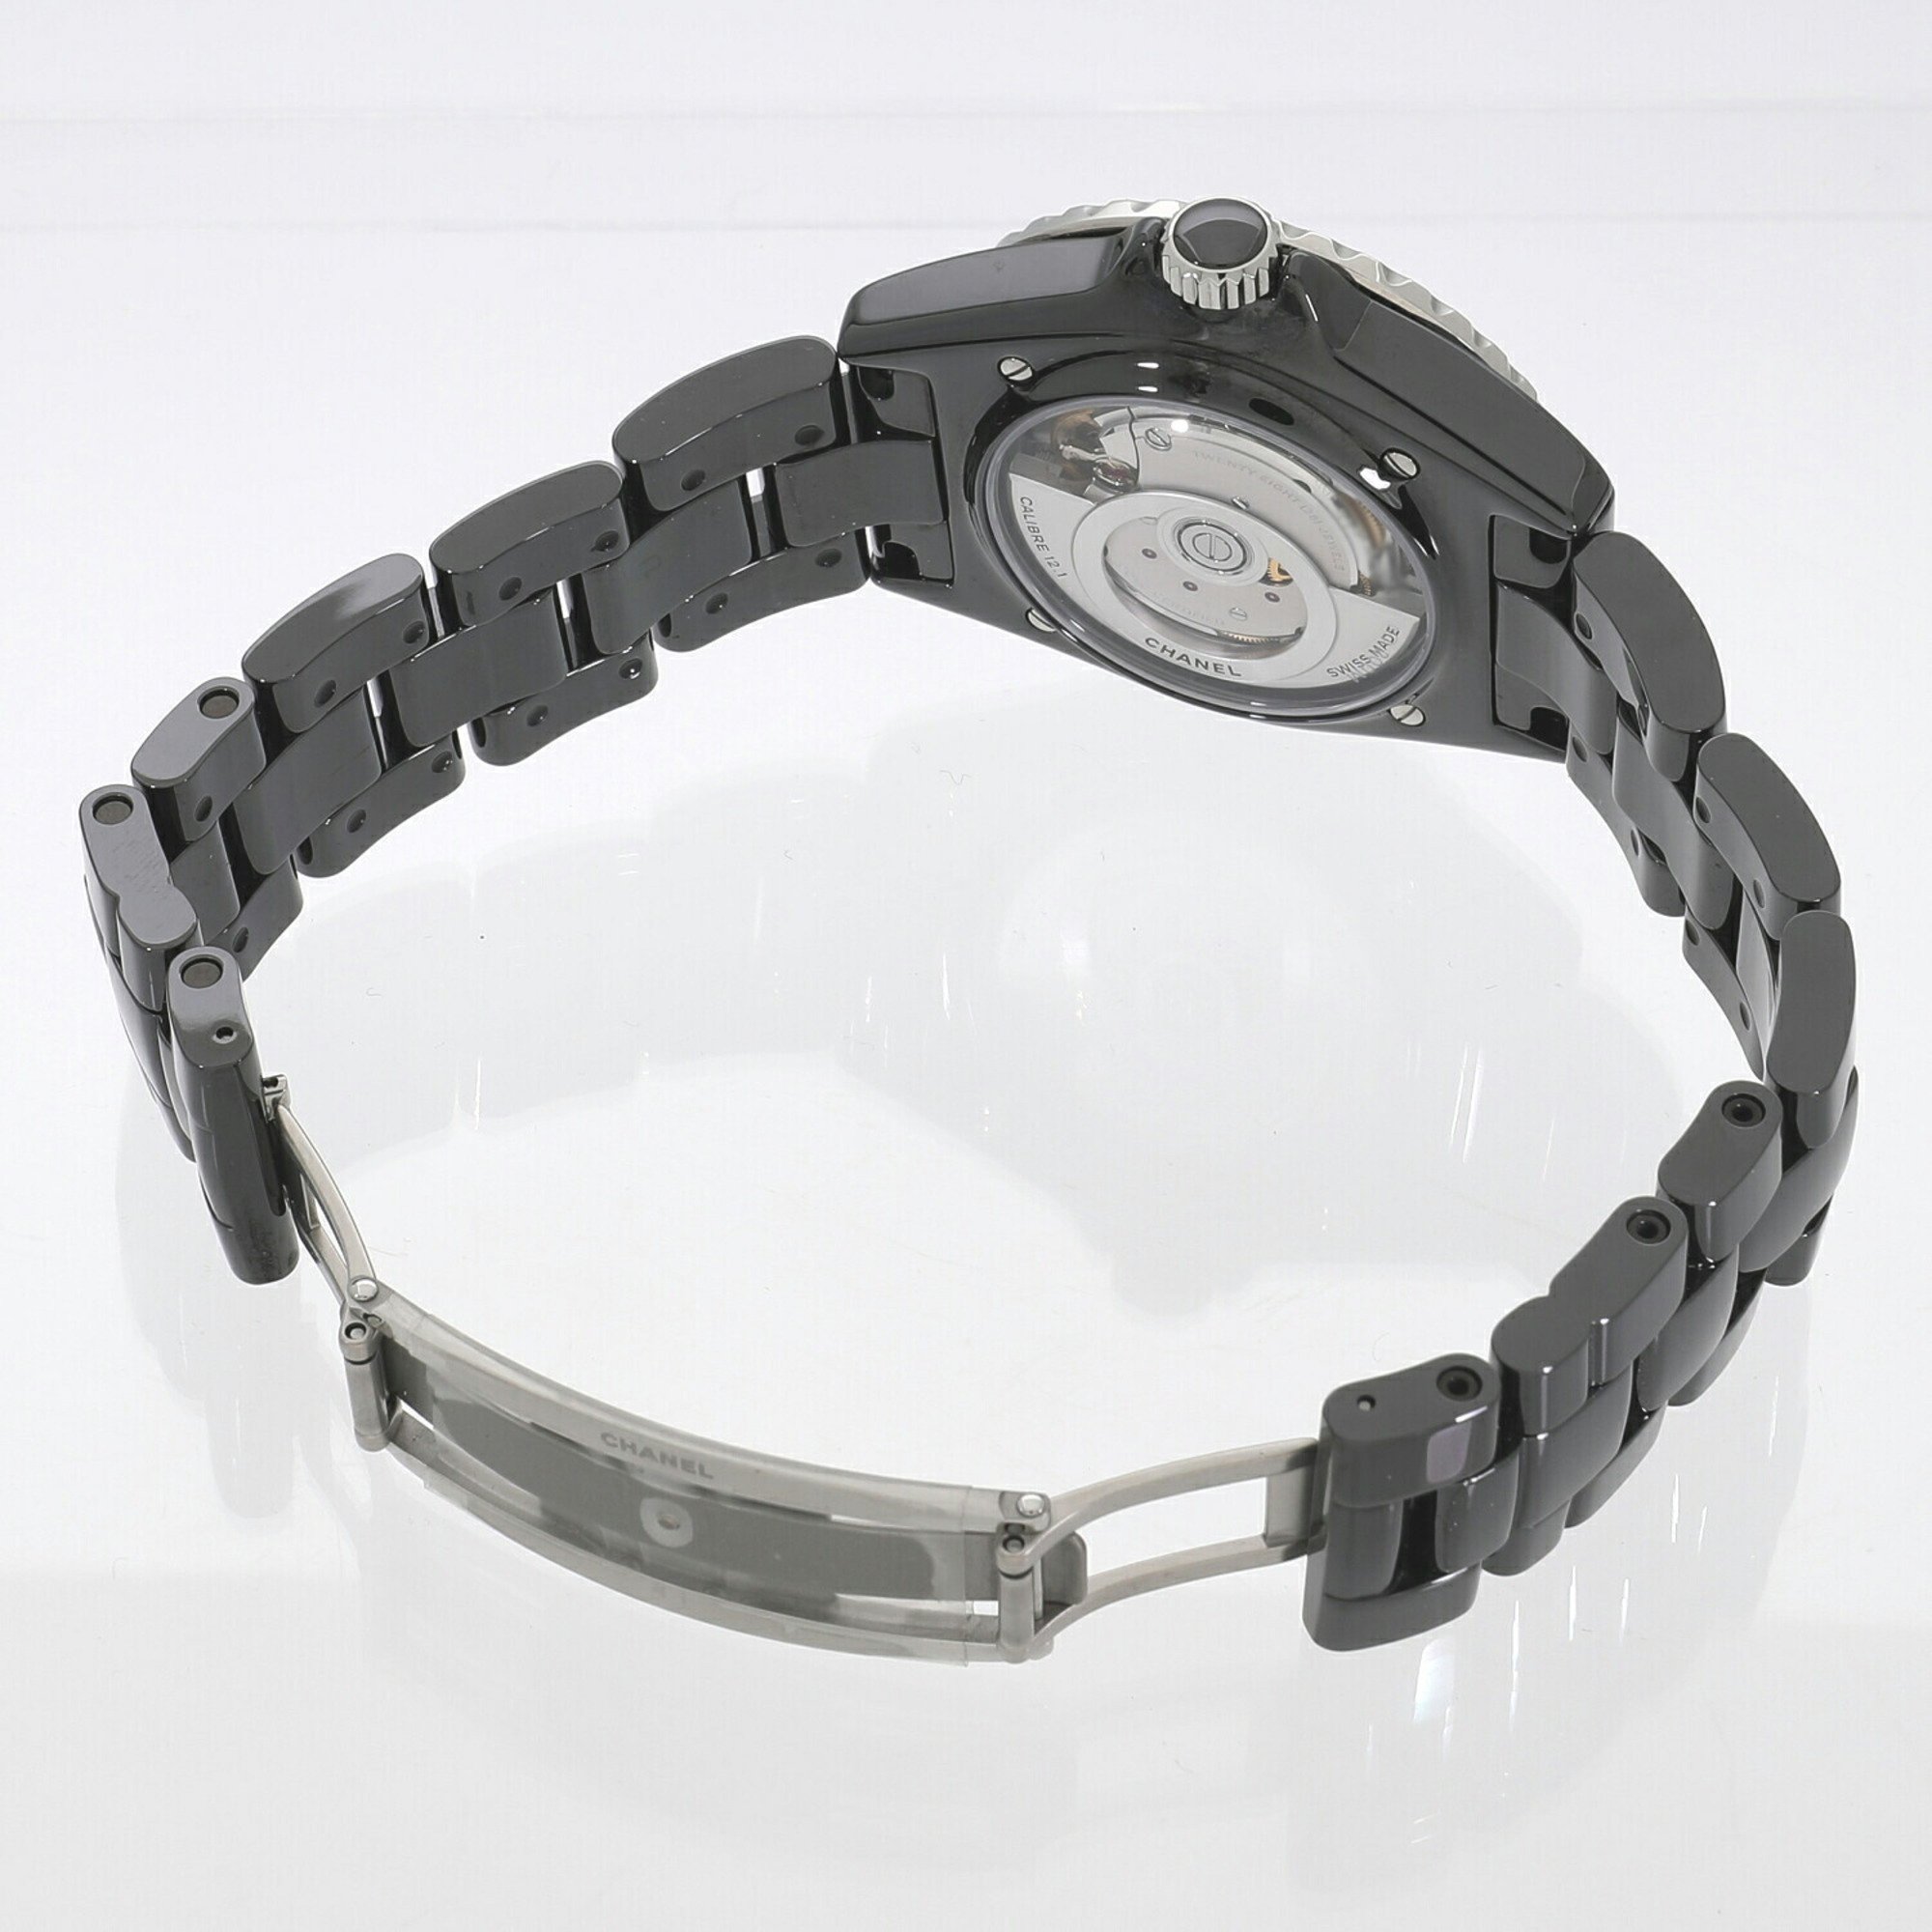 Chanel J12 Black Ceramic 38mm H5697 Men's Watch